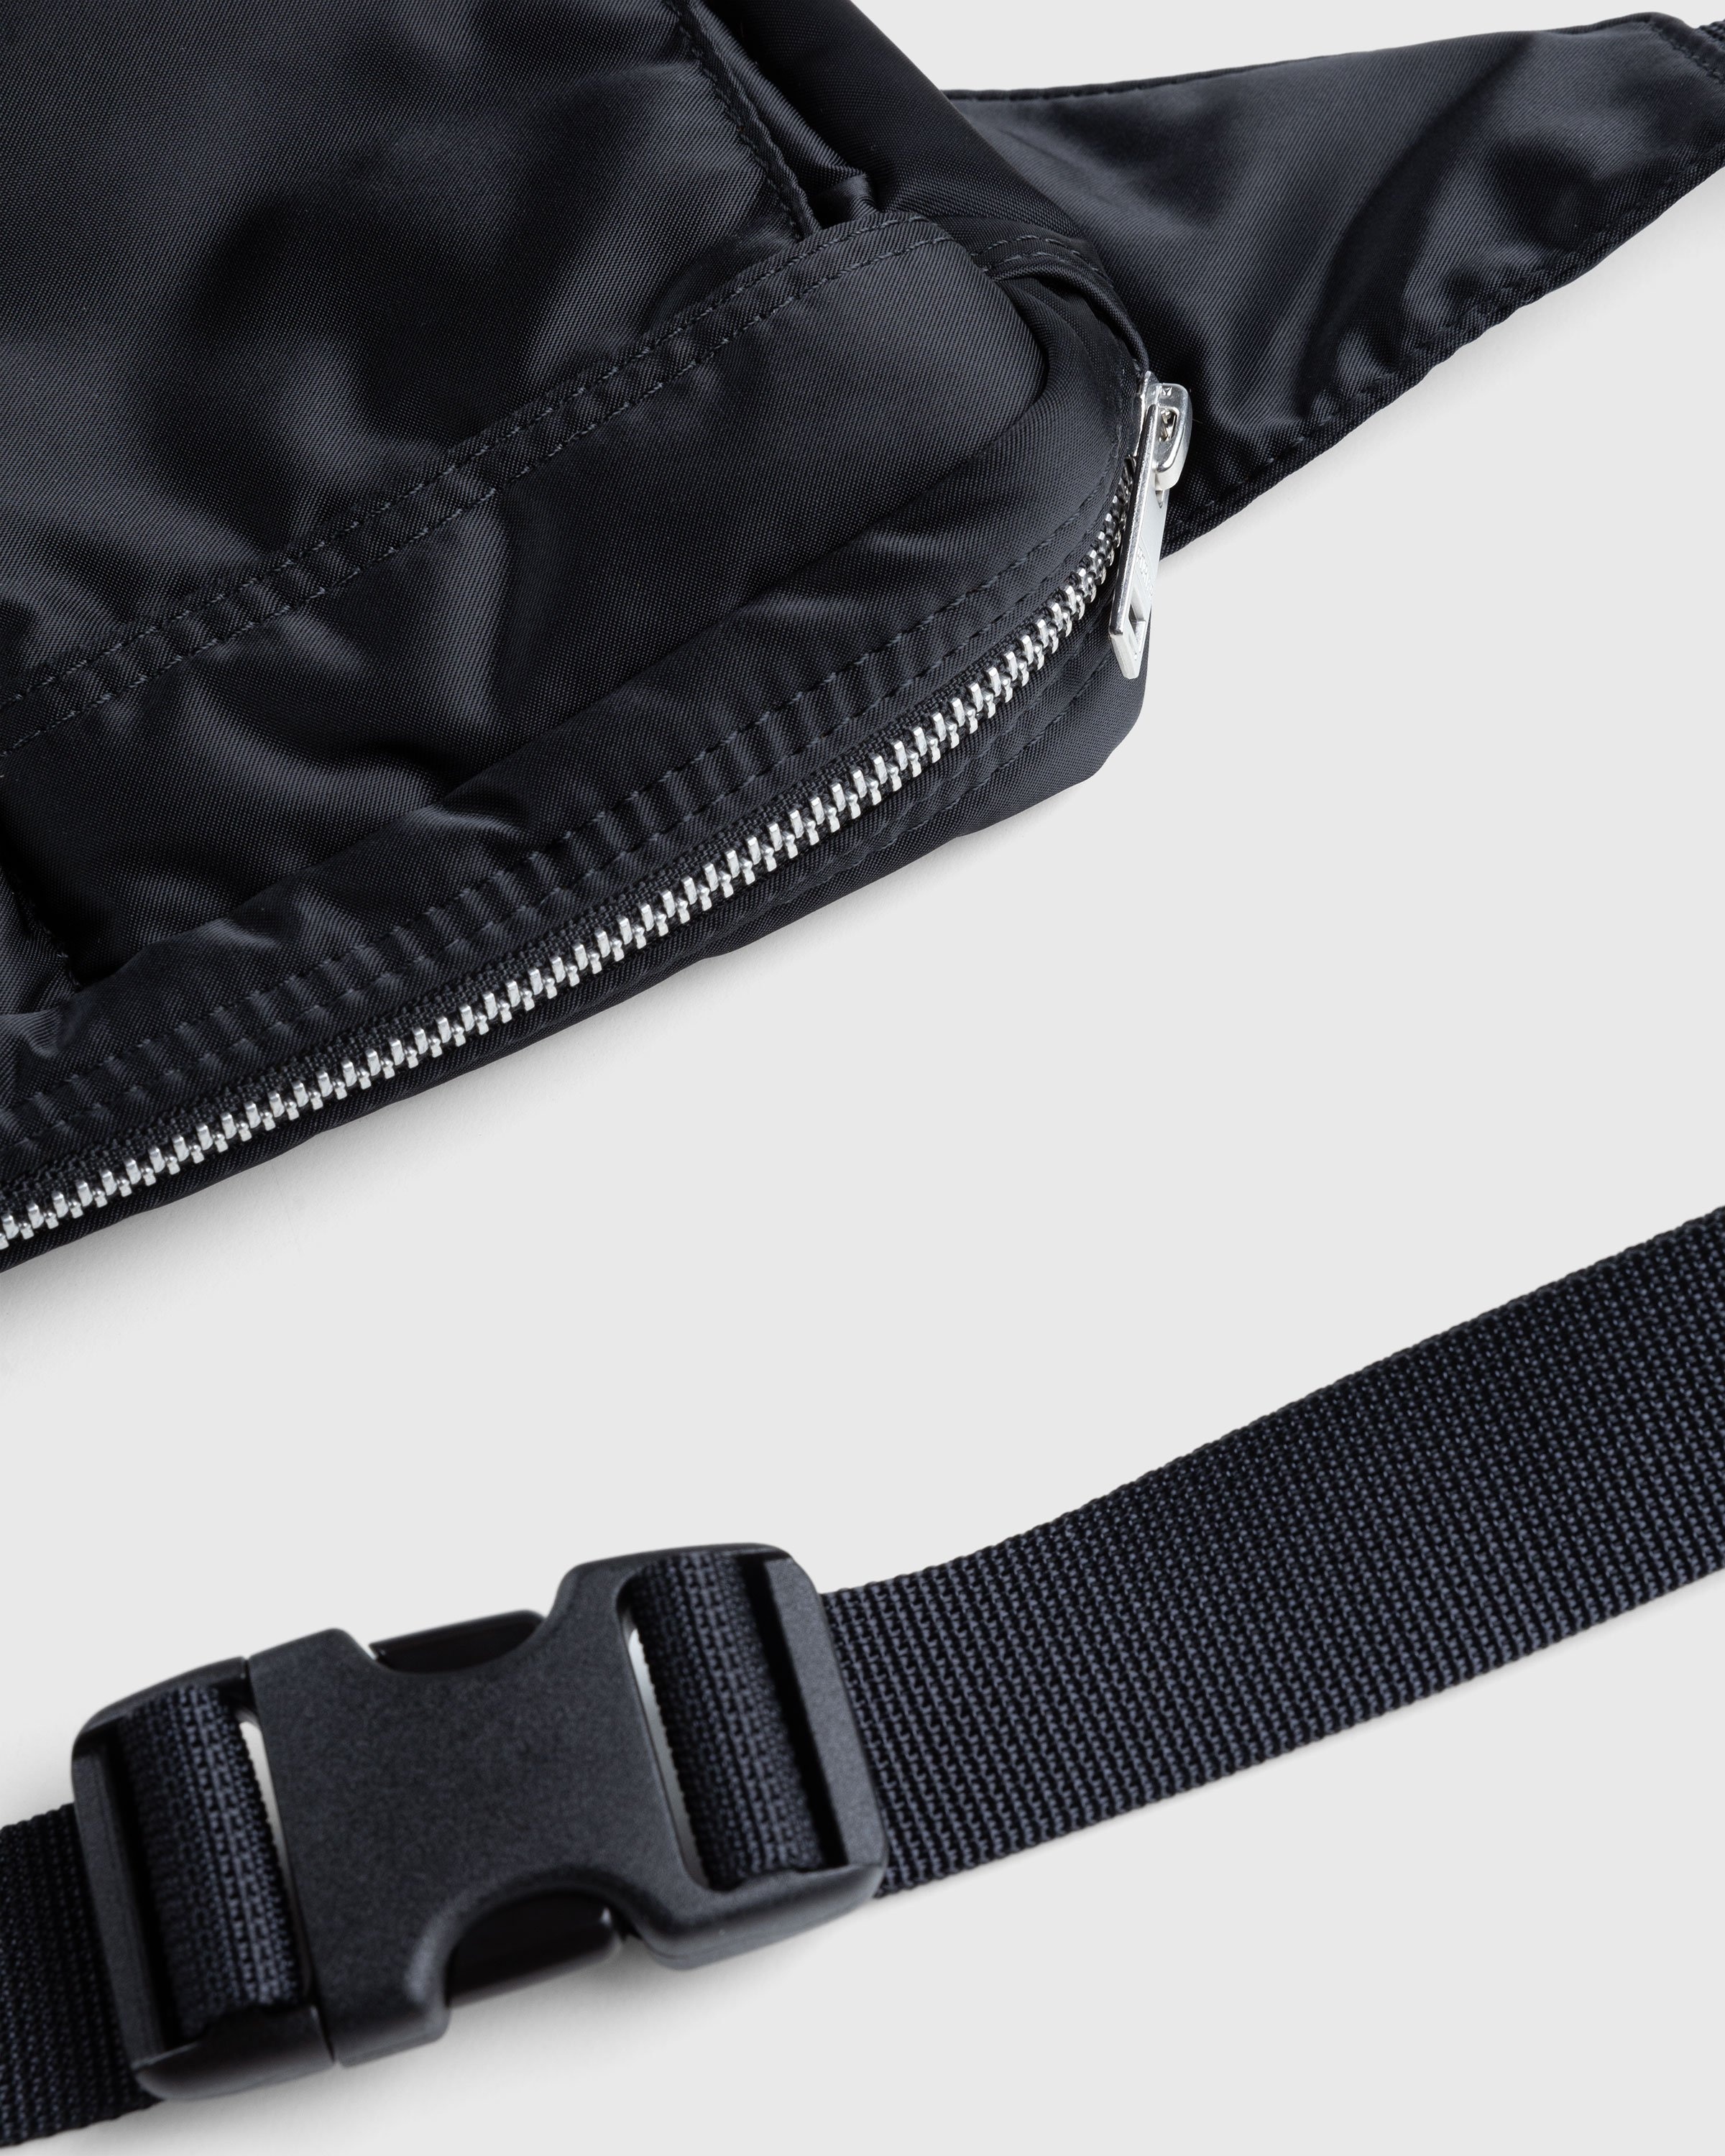 Porter-Yoshida & Co. – Tanker Waist Bag Black - One Size